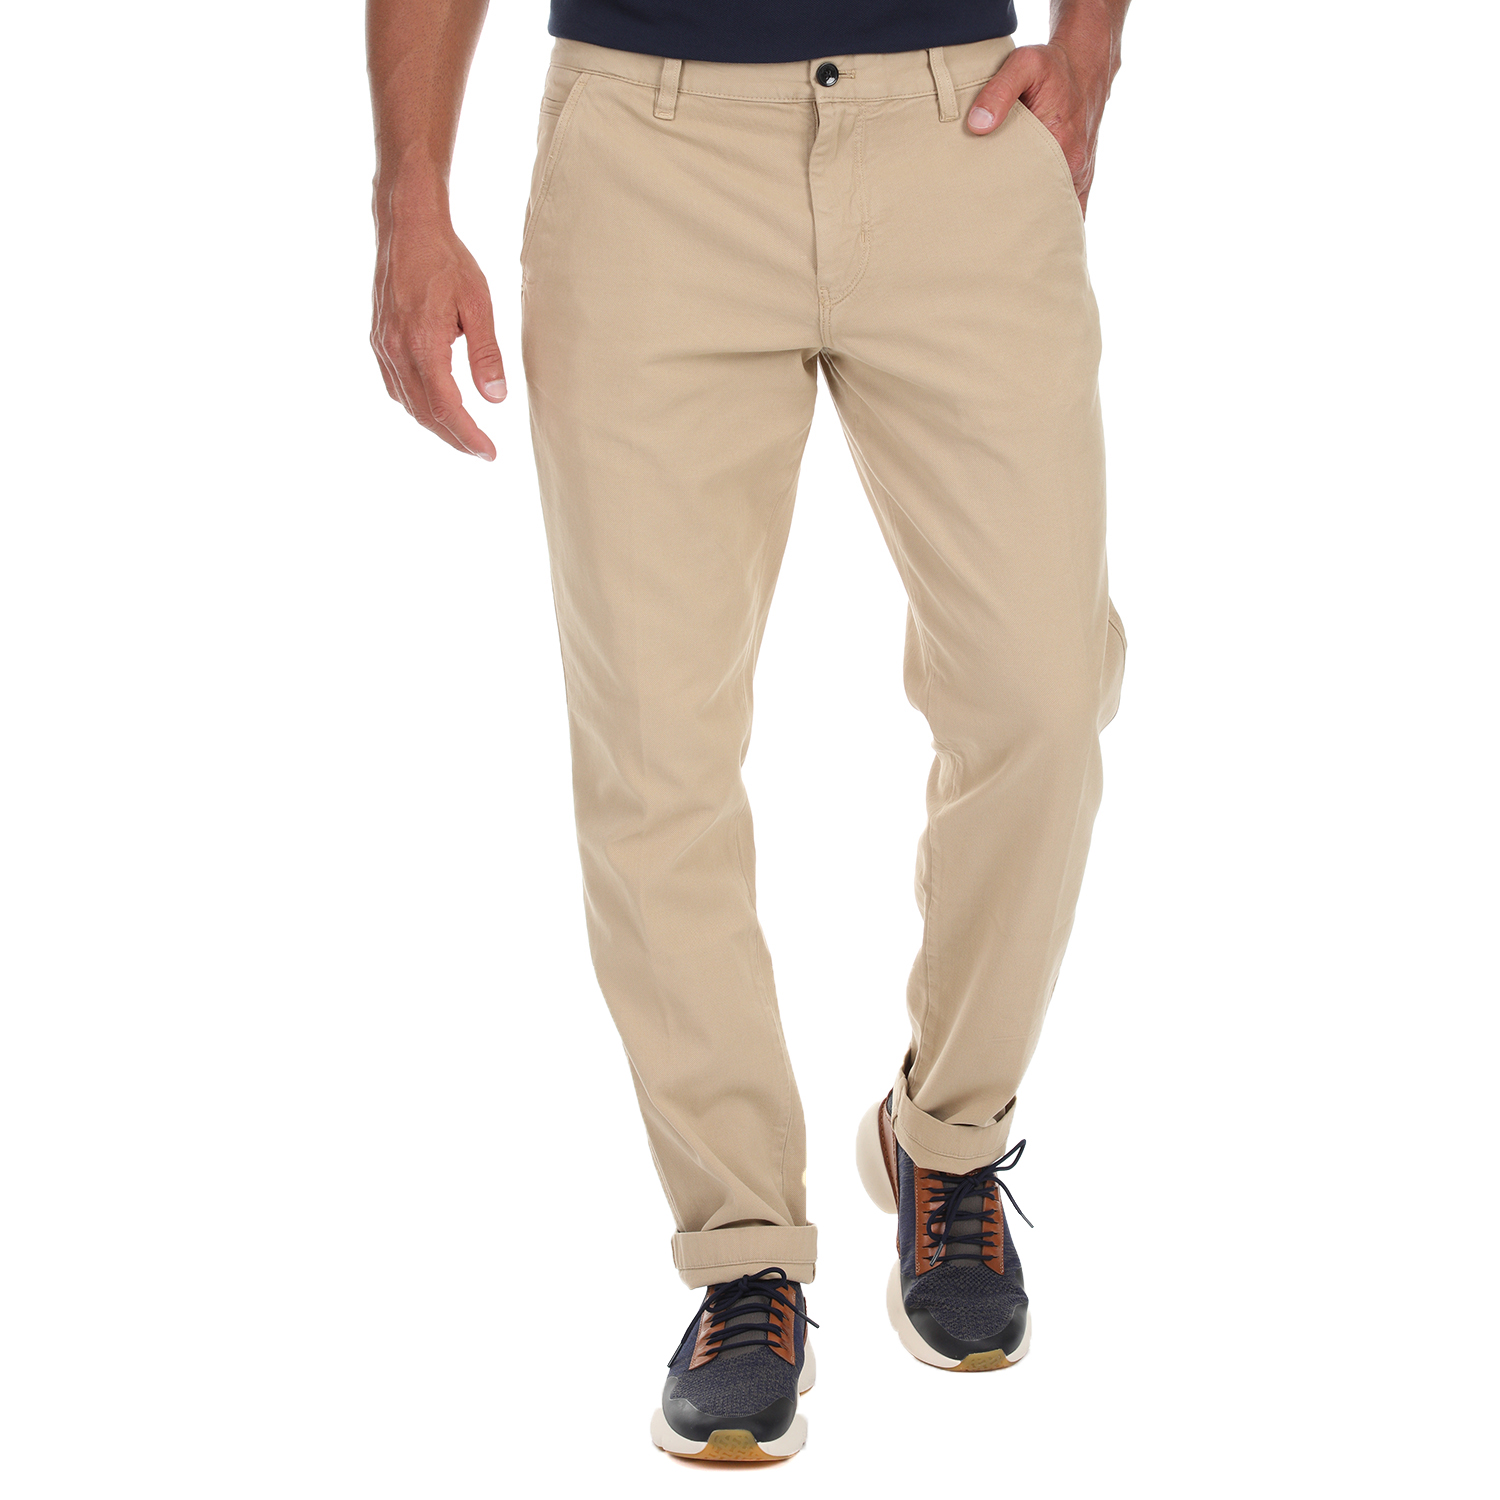 CK - Ανδρικό casual παντελόνι CK μπεζ Ανδρικά/Ρούχα/Παντελόνια/Chinos